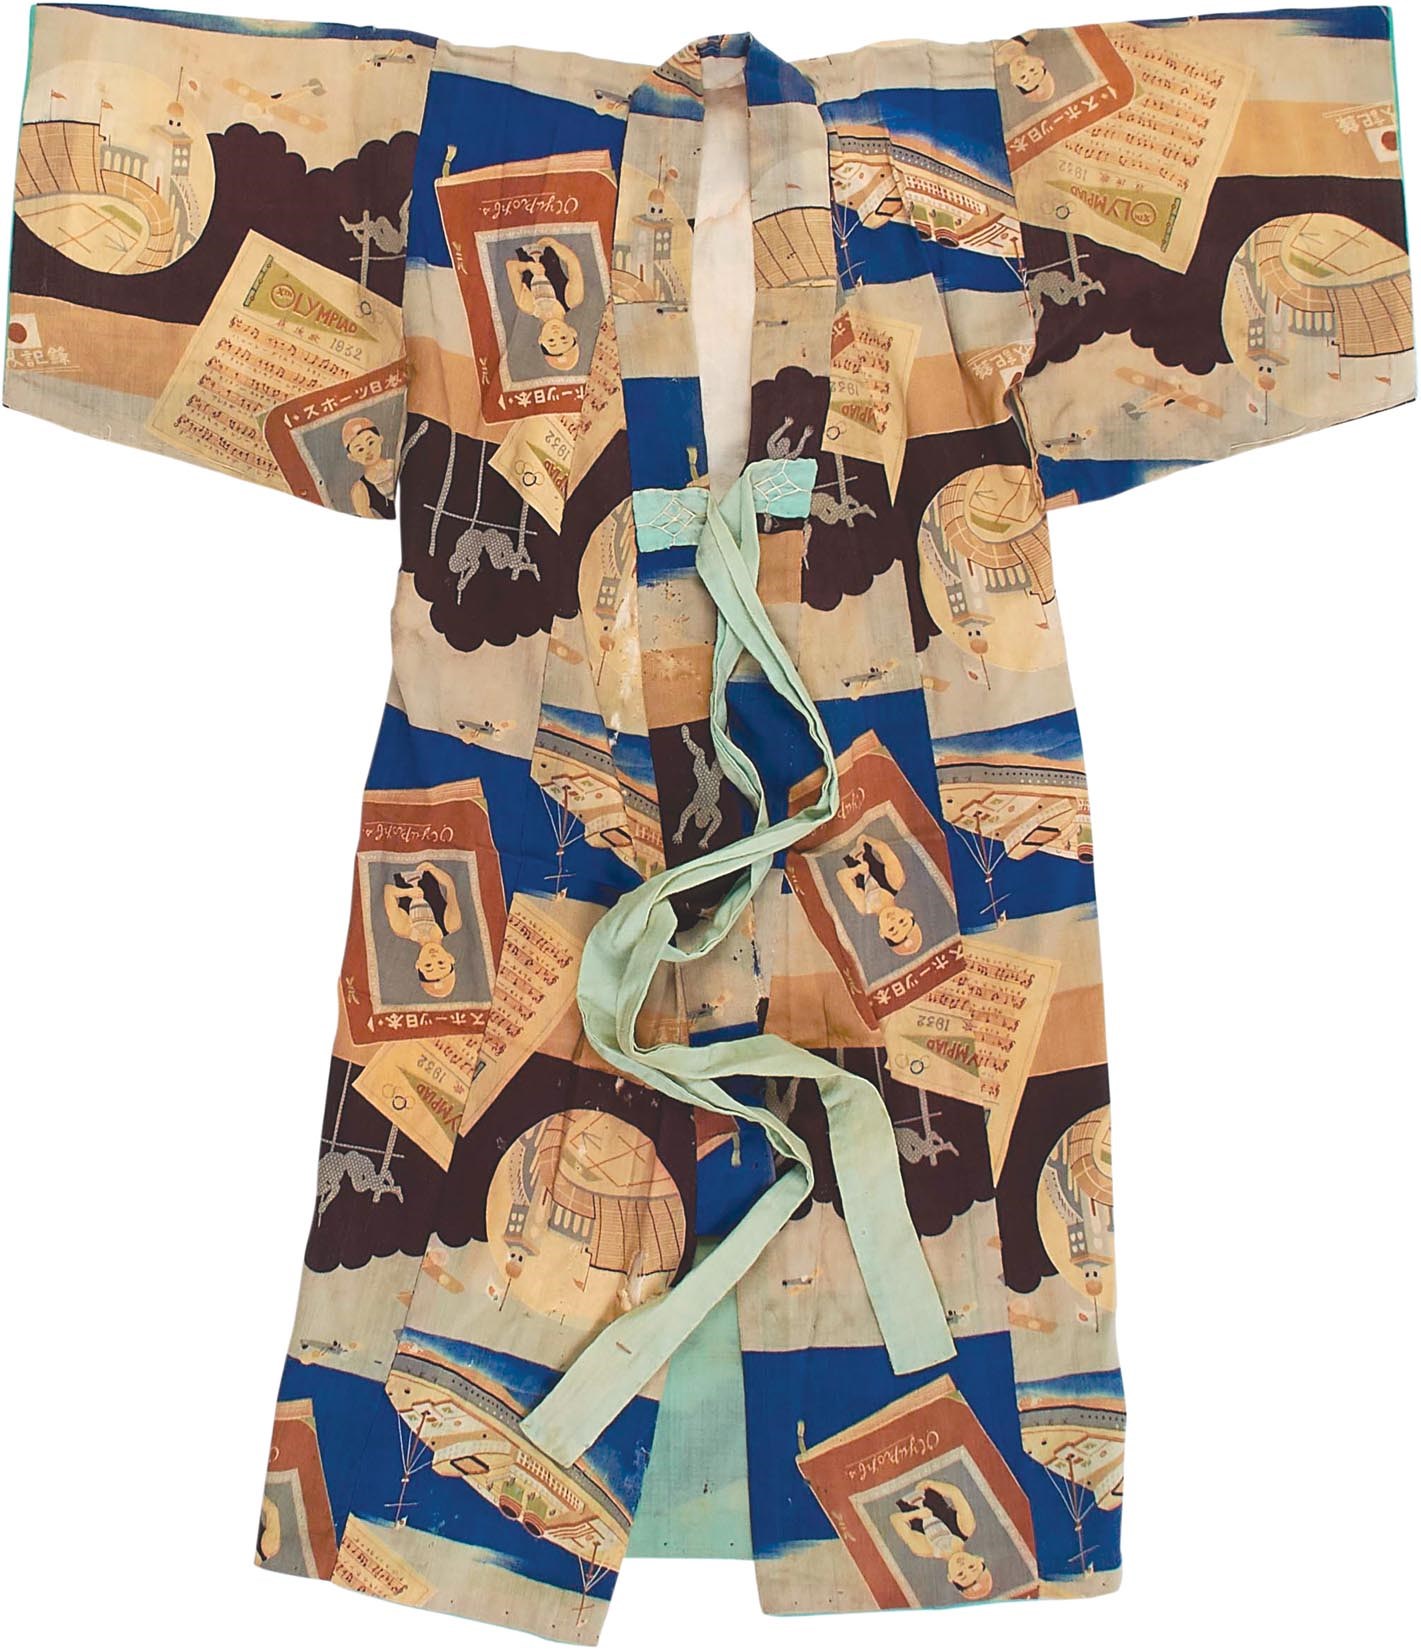 Negro League, Latin, Japanese & International Base - 1932 Olympic Kimono - The Nippon Collection